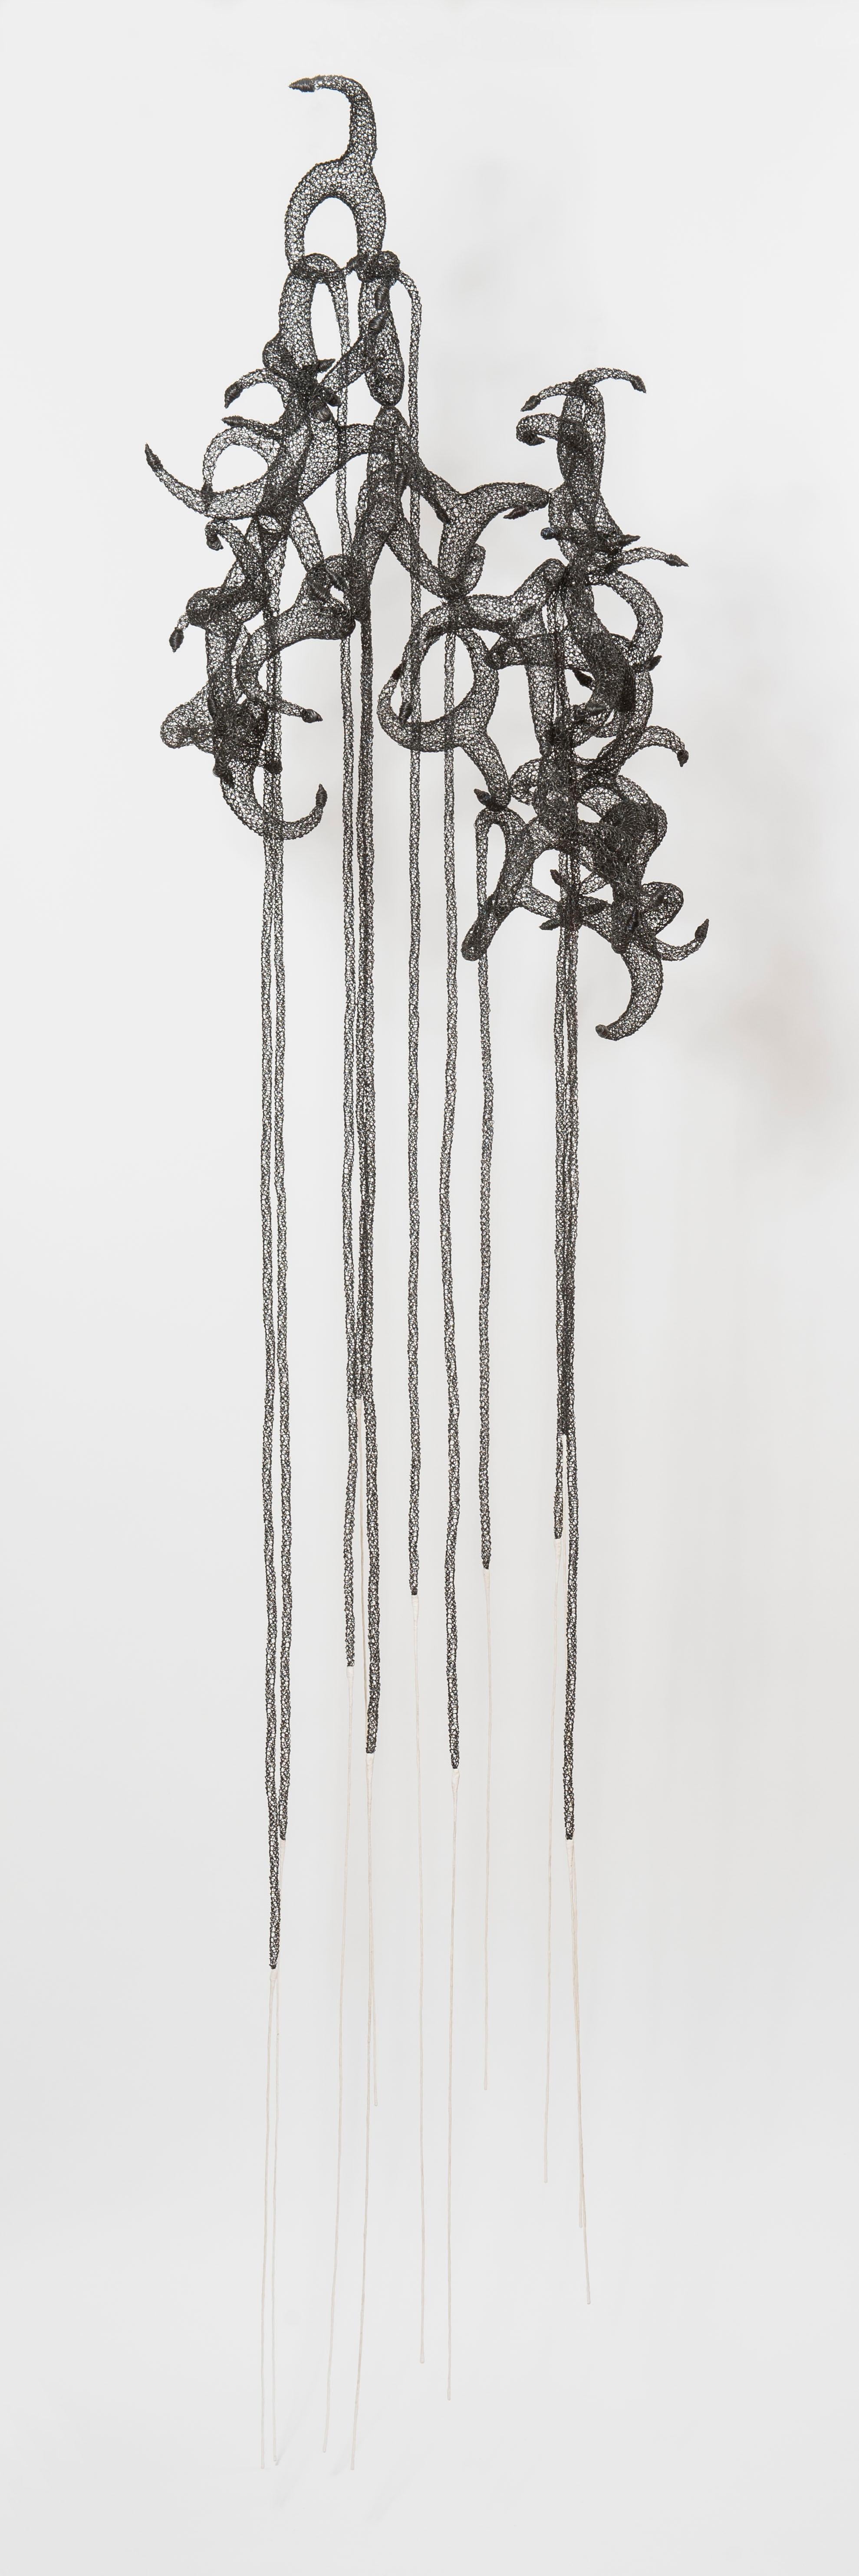 Delphine Grandvaux Abstract Sculpture - "Cumulonimbus", Tall Transparent Handmade Airy Metal Wire Mesh Pendant Sculpture